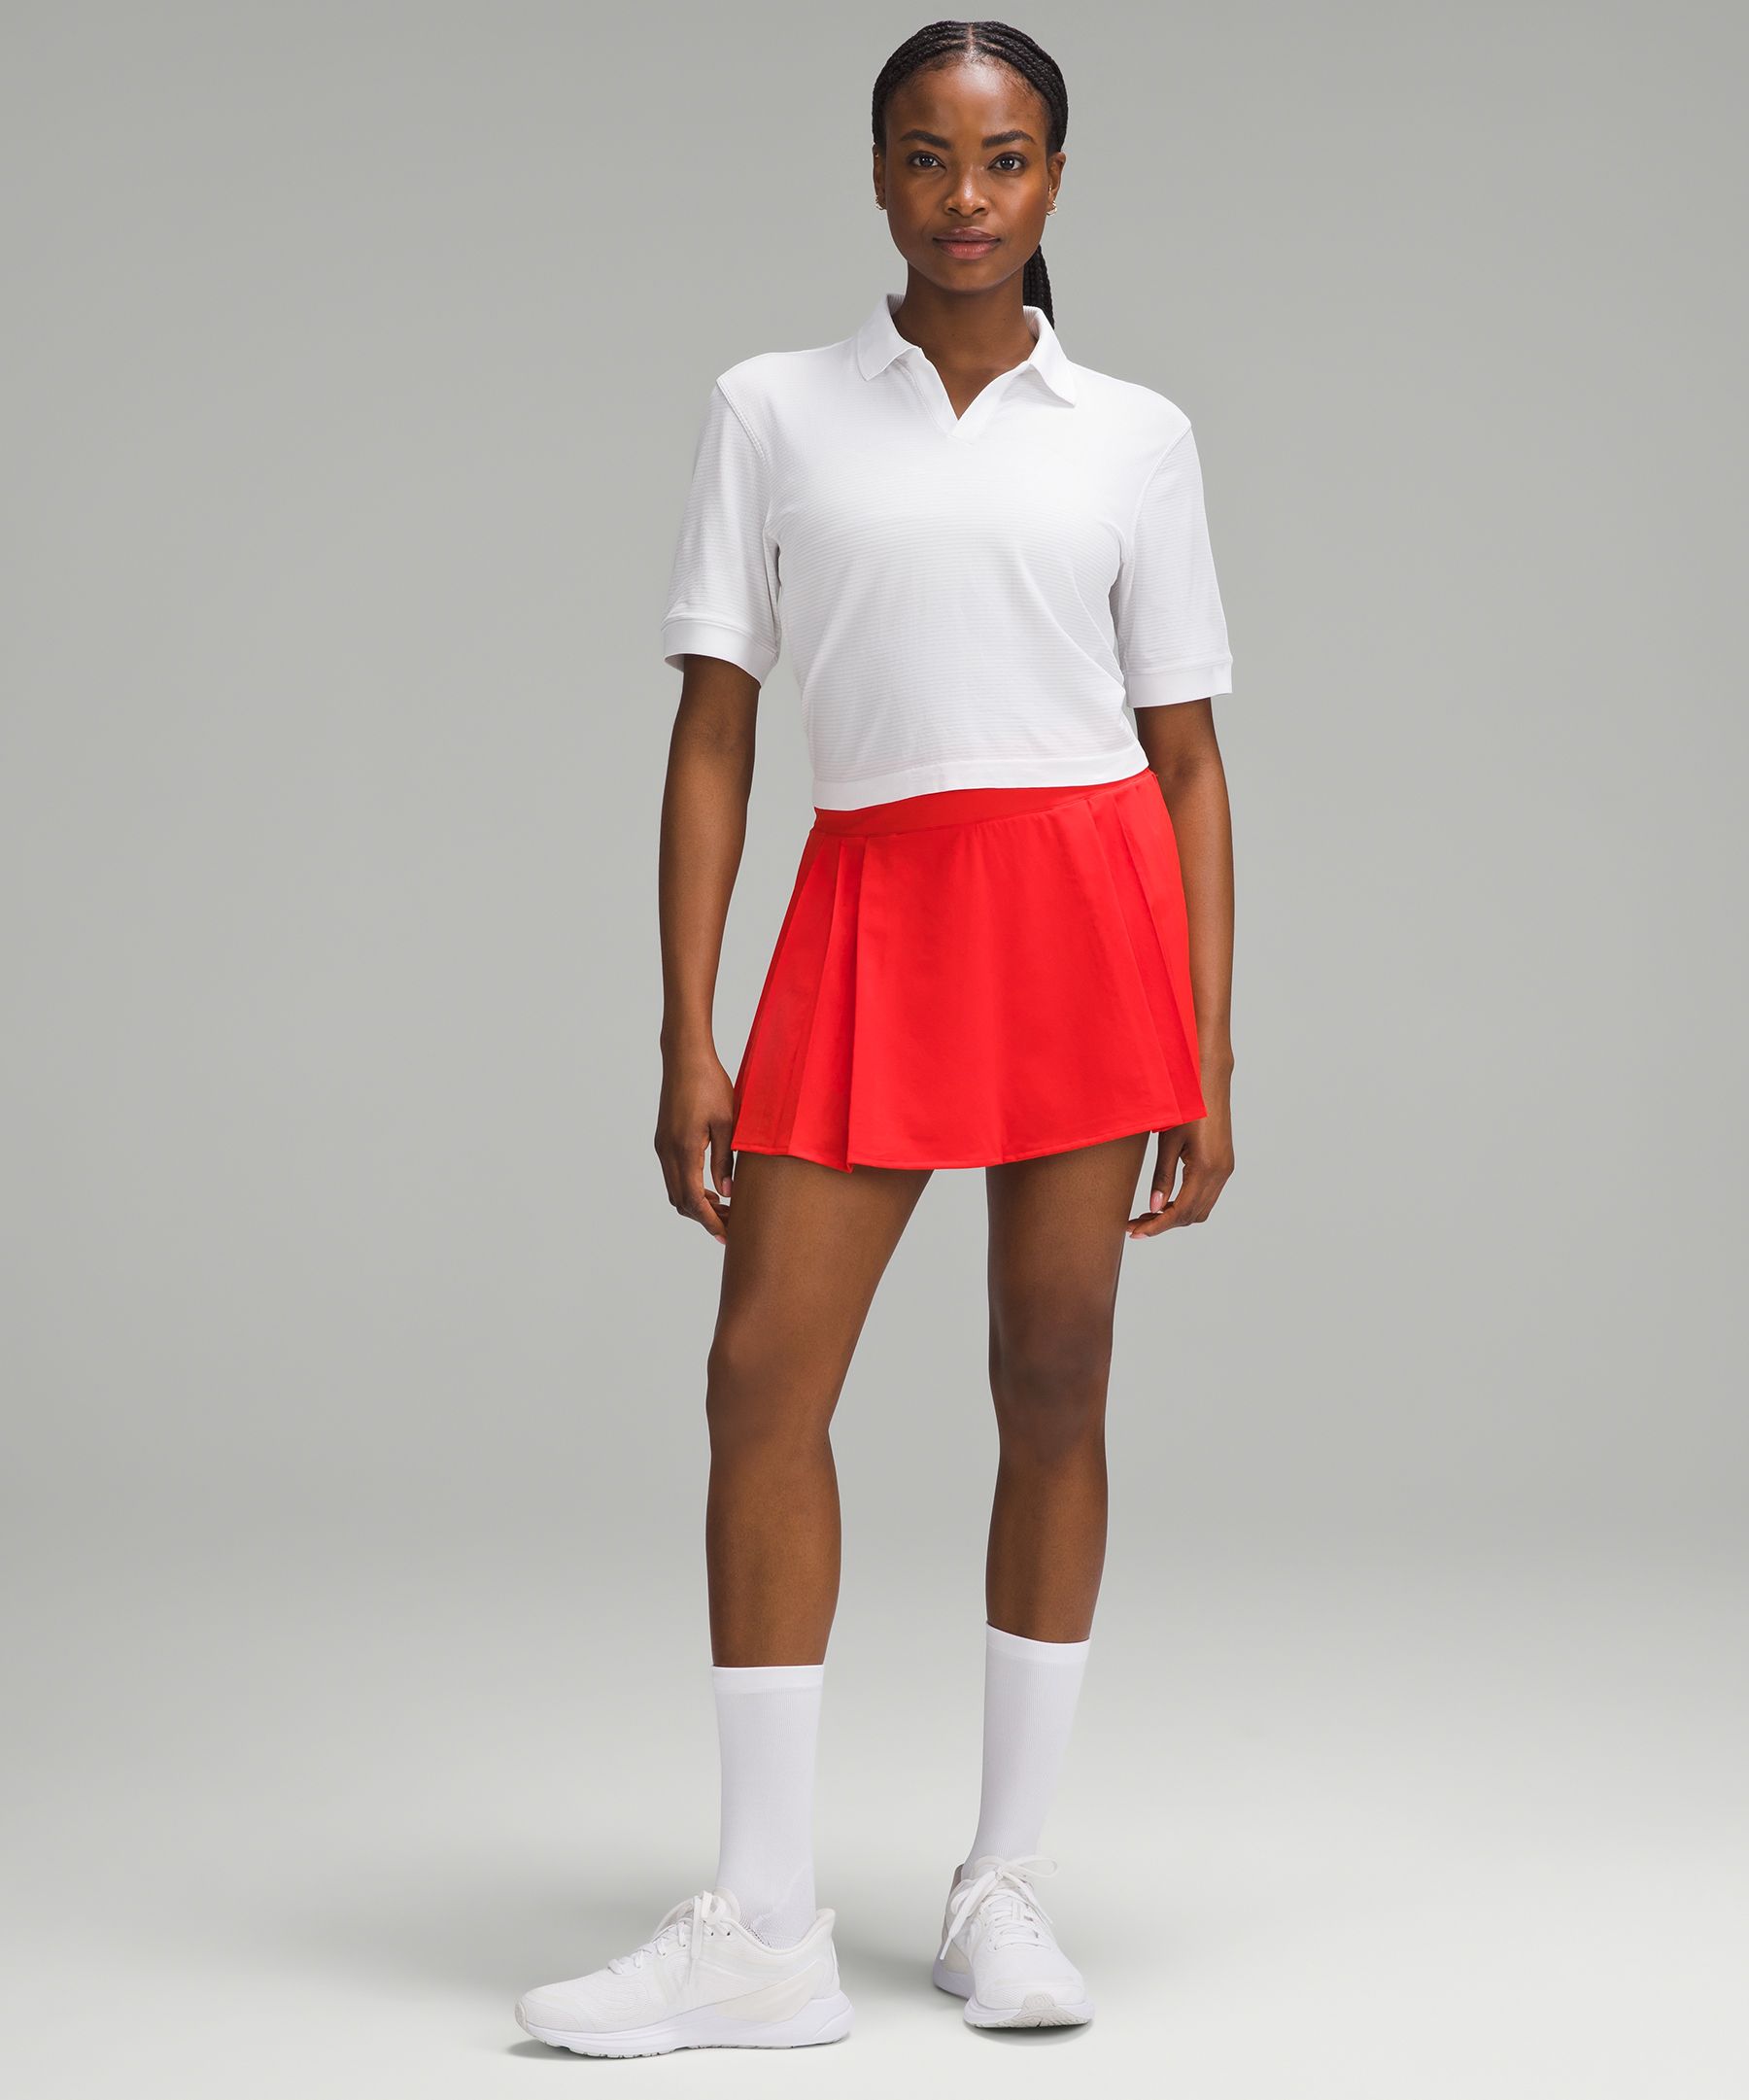 Shop Lululemon Side-pleat High-rise Tennis Skirt